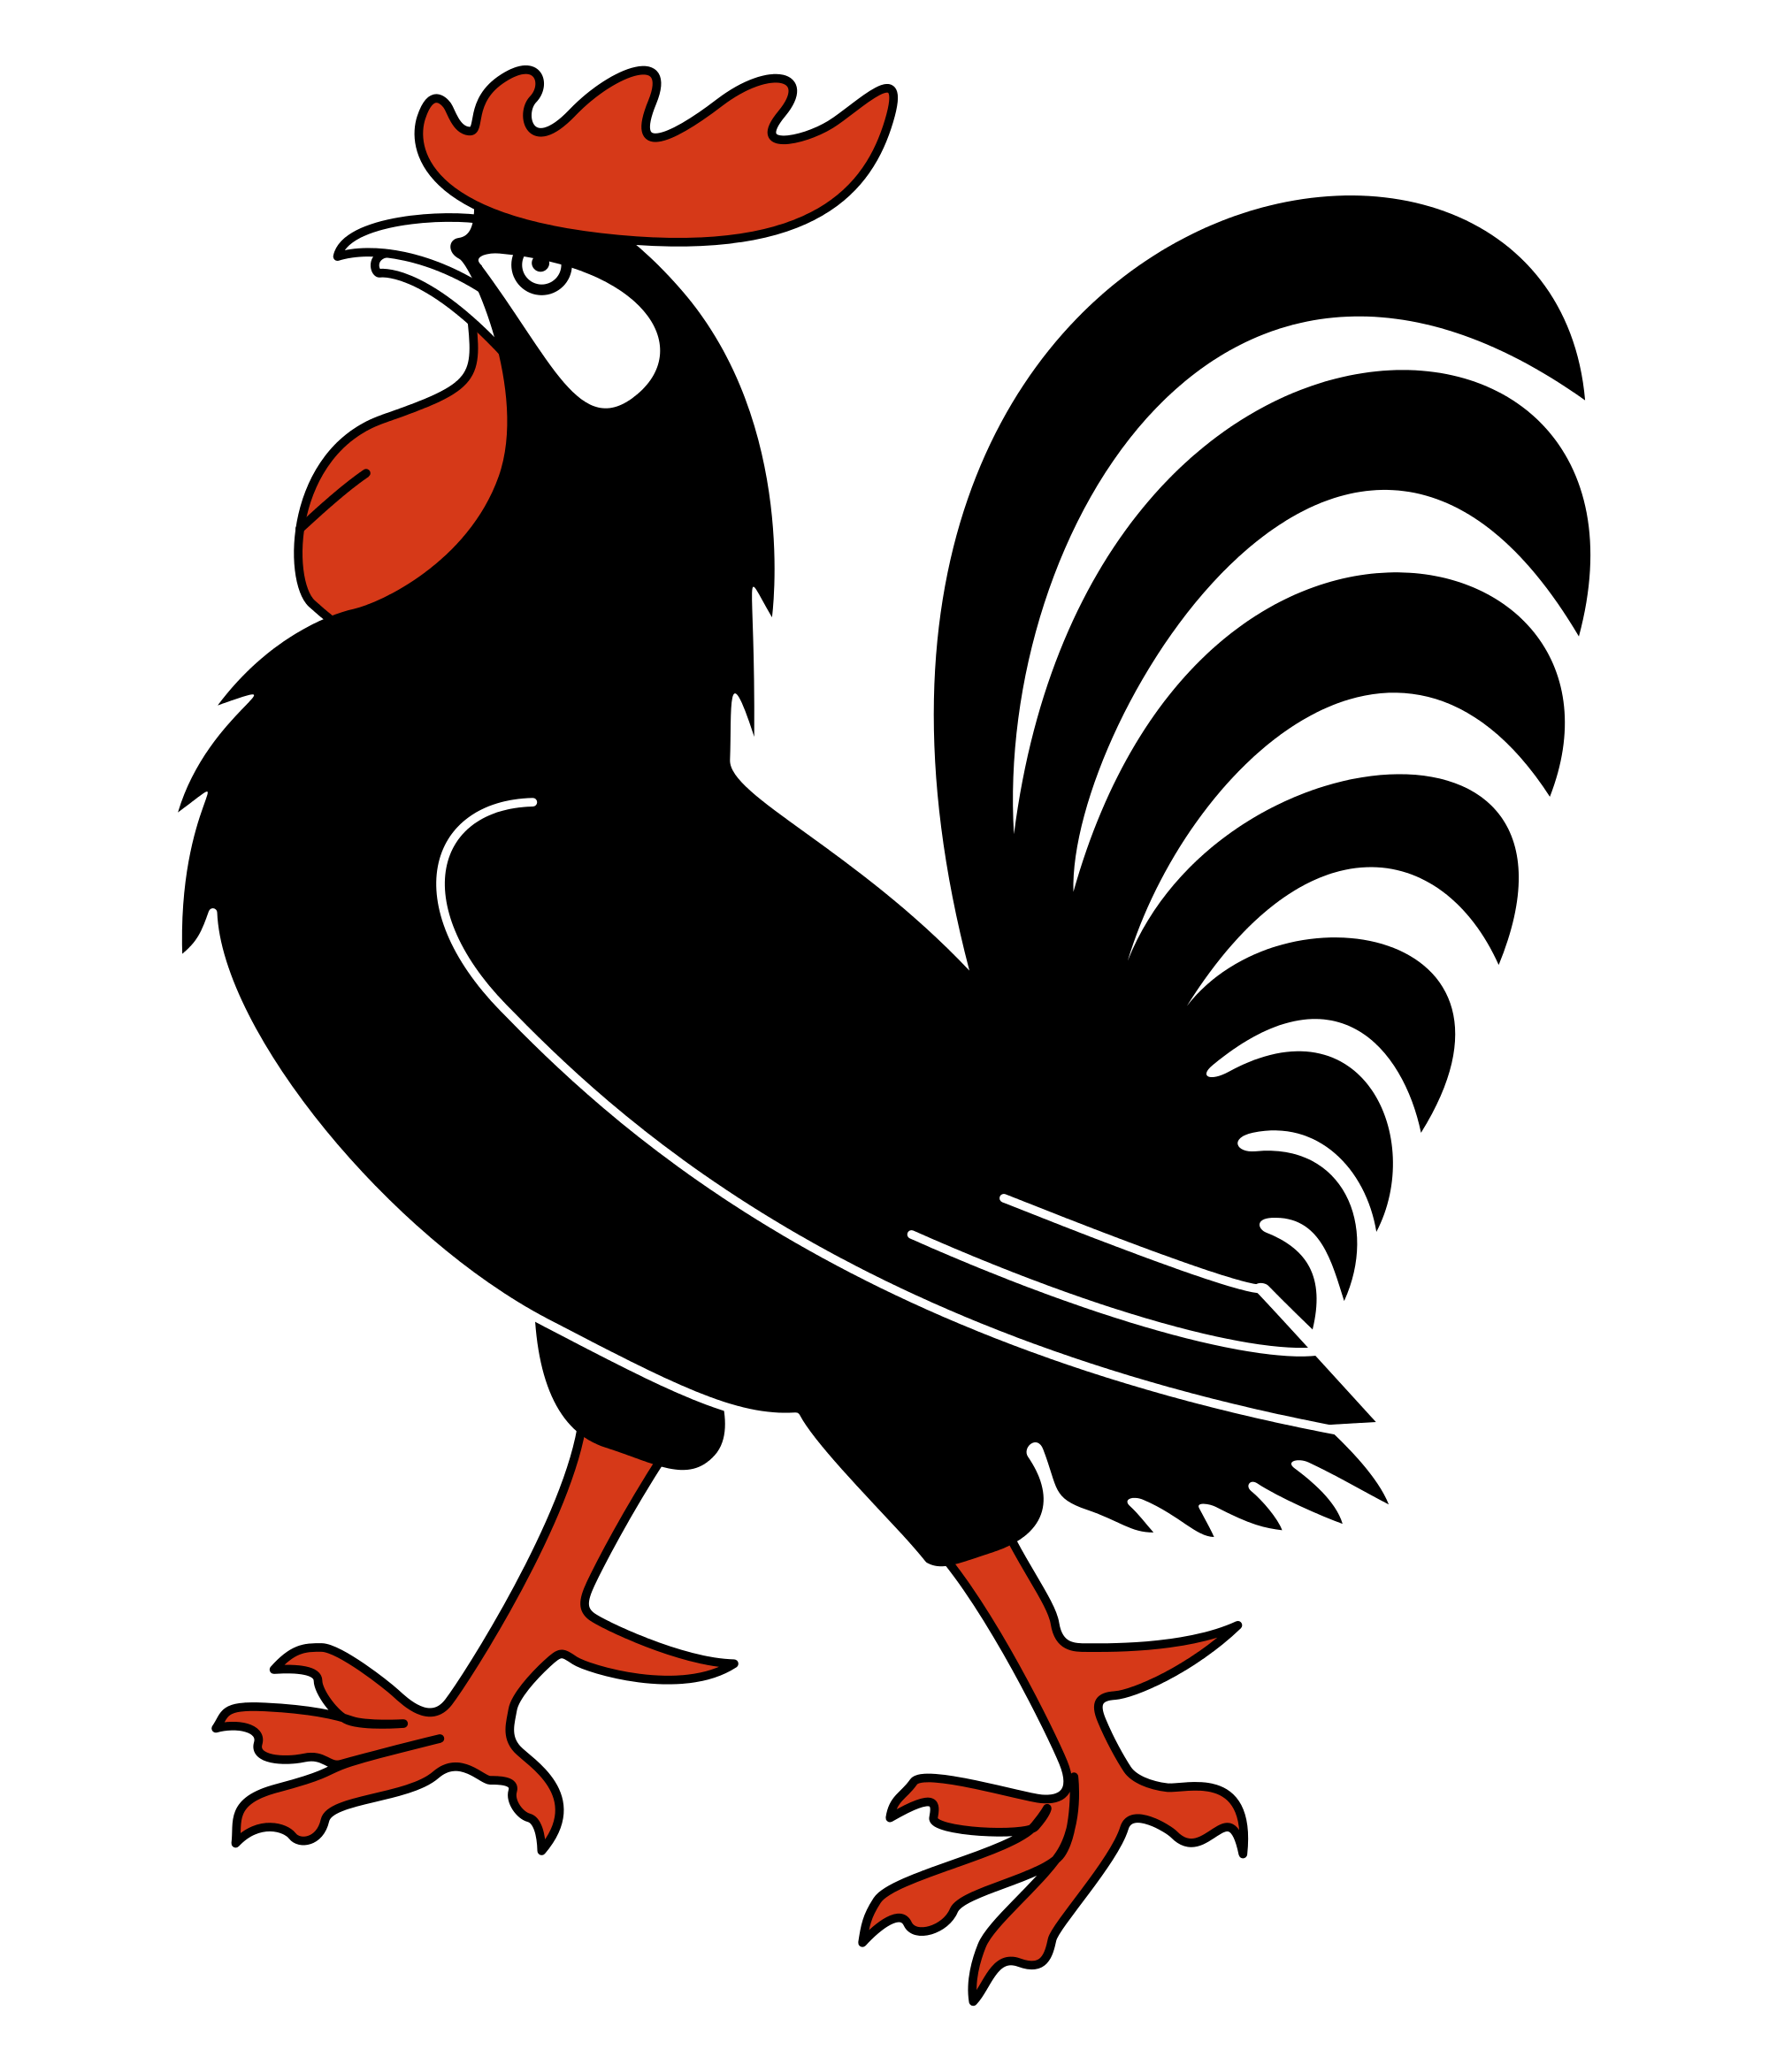 Ayam (ayam jantan)